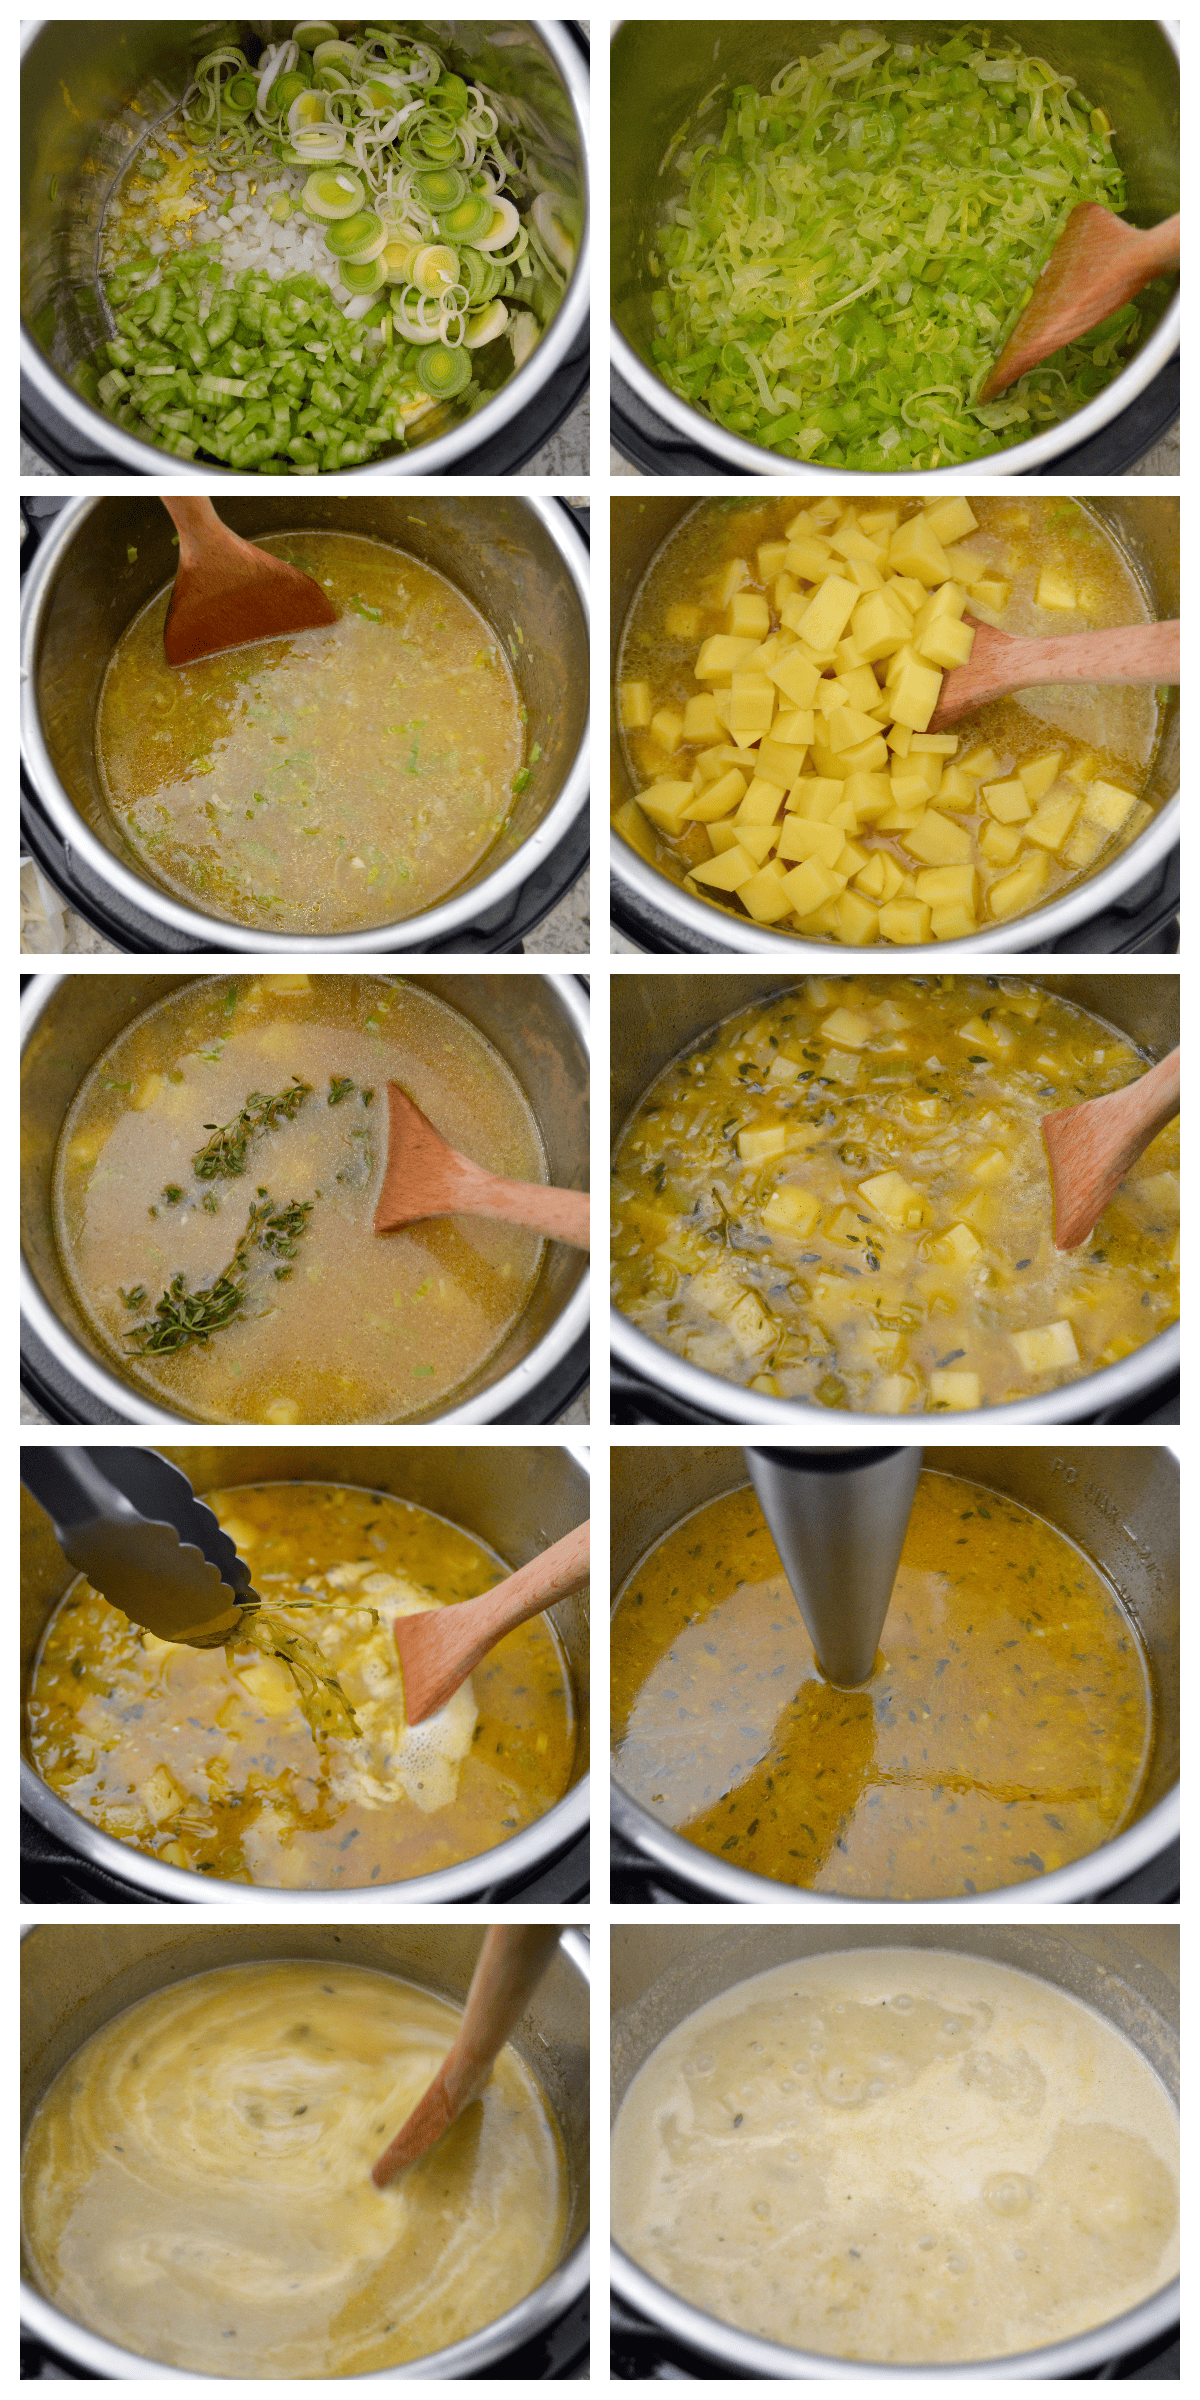 10 images showing steps to make instant pot potato leek soup.